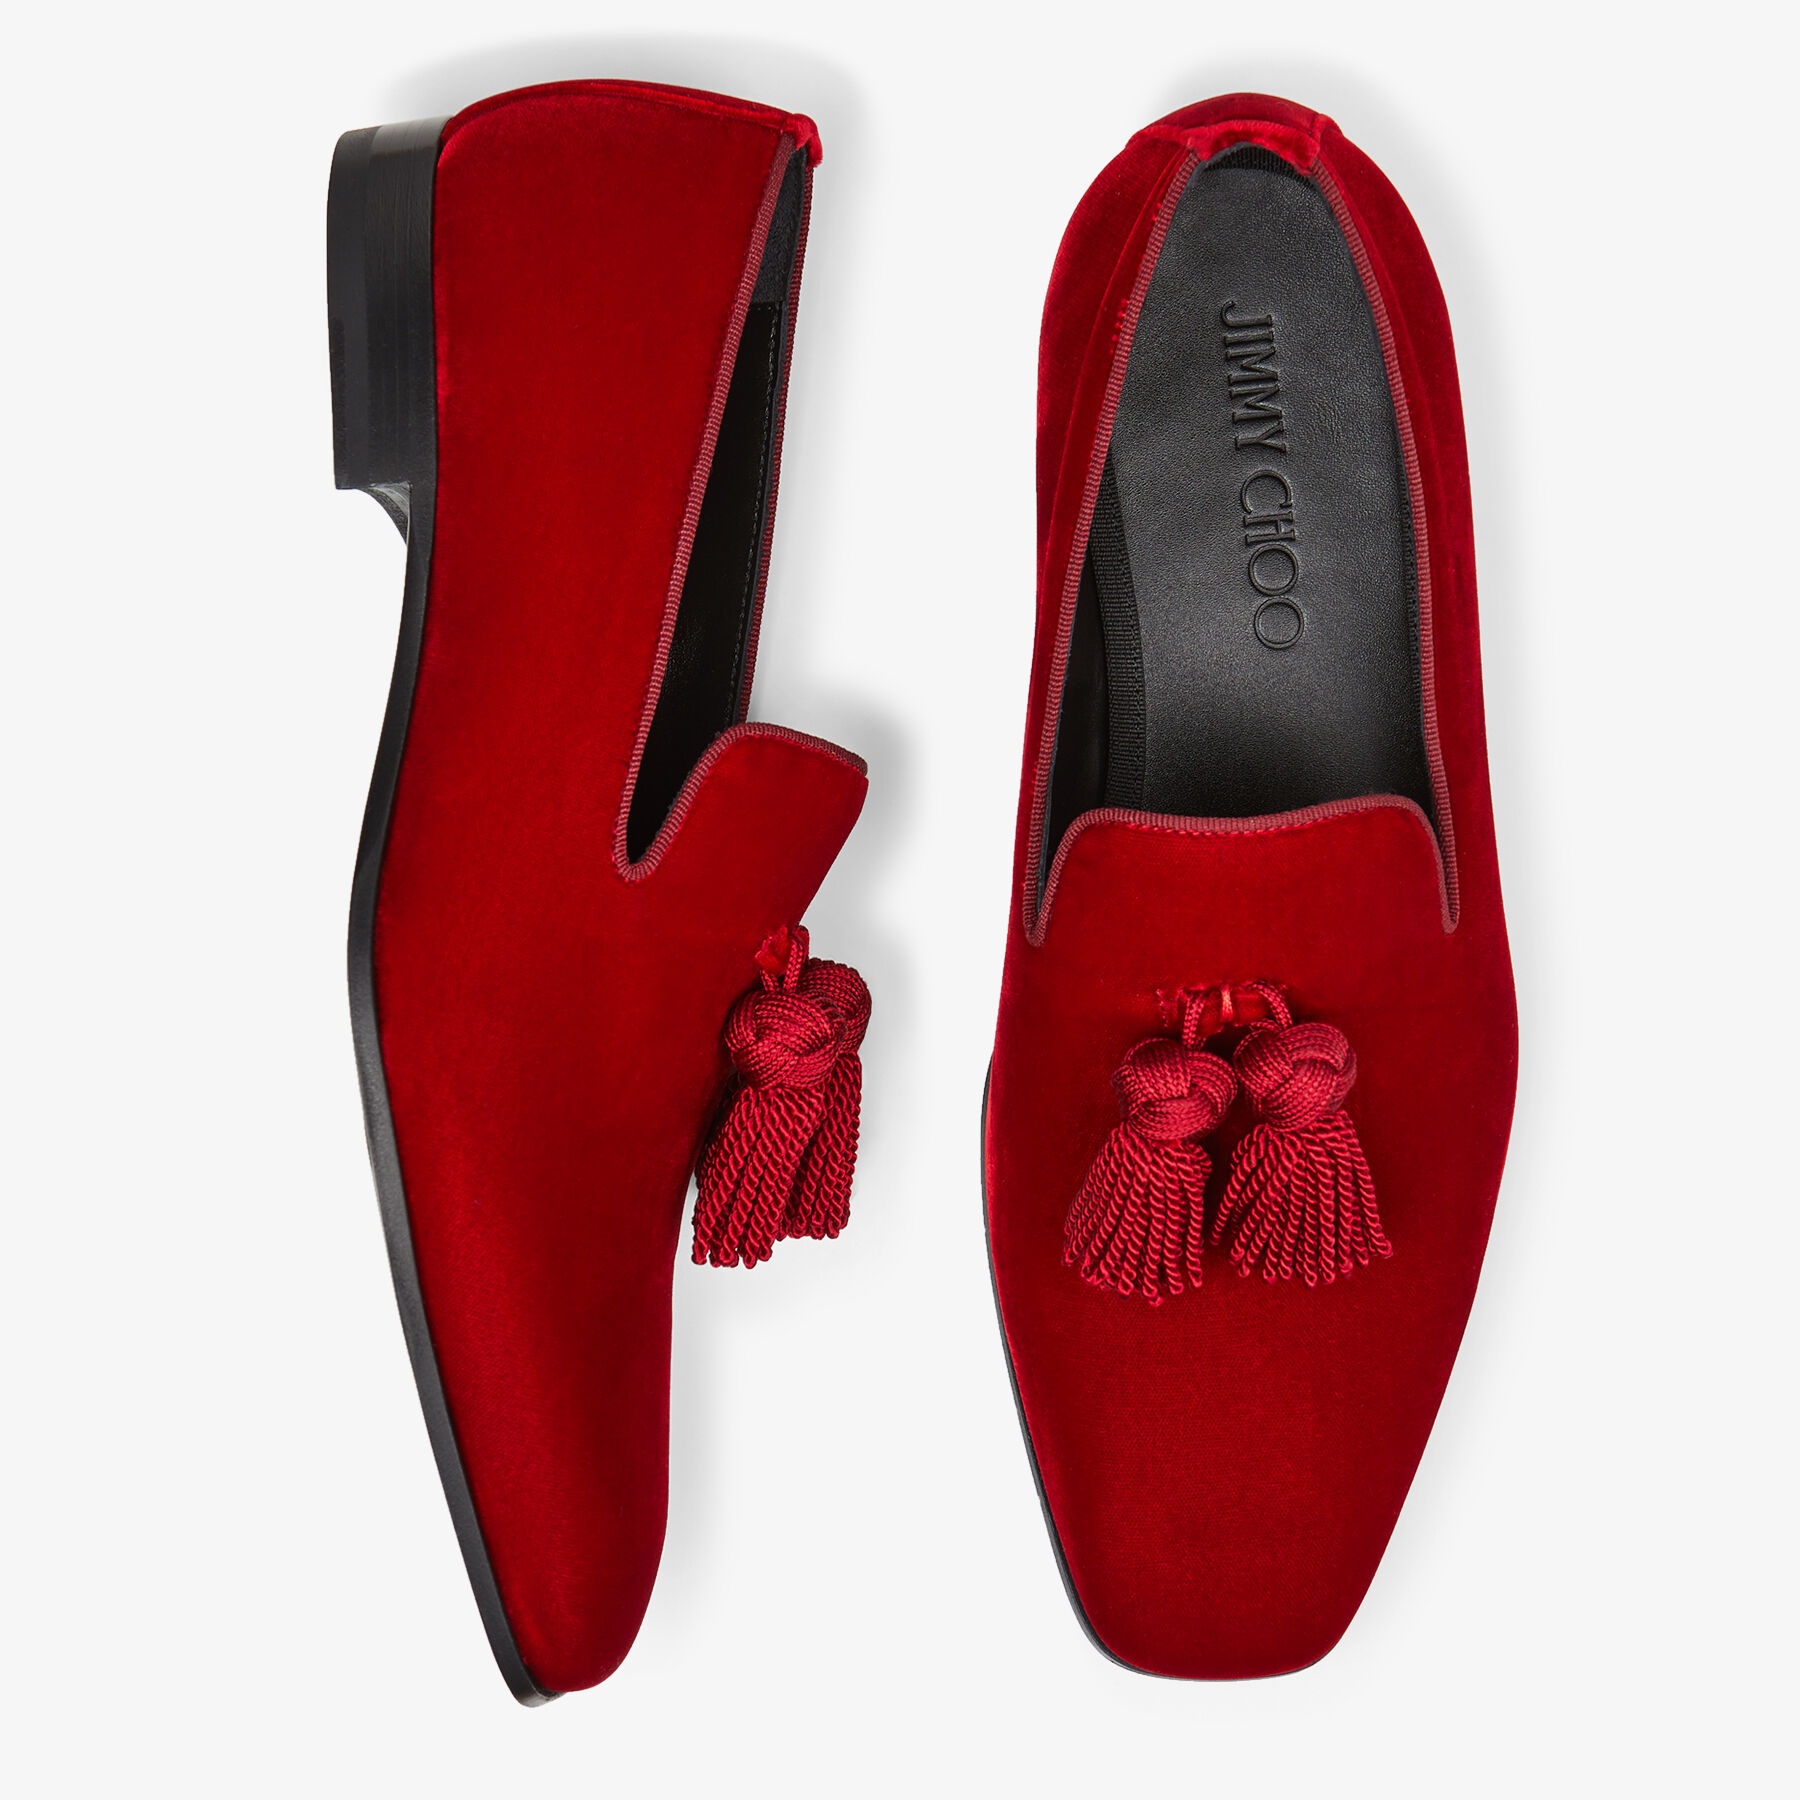 Foxley/M
Red Velvet Slip-On Shoes with Tassel - 5